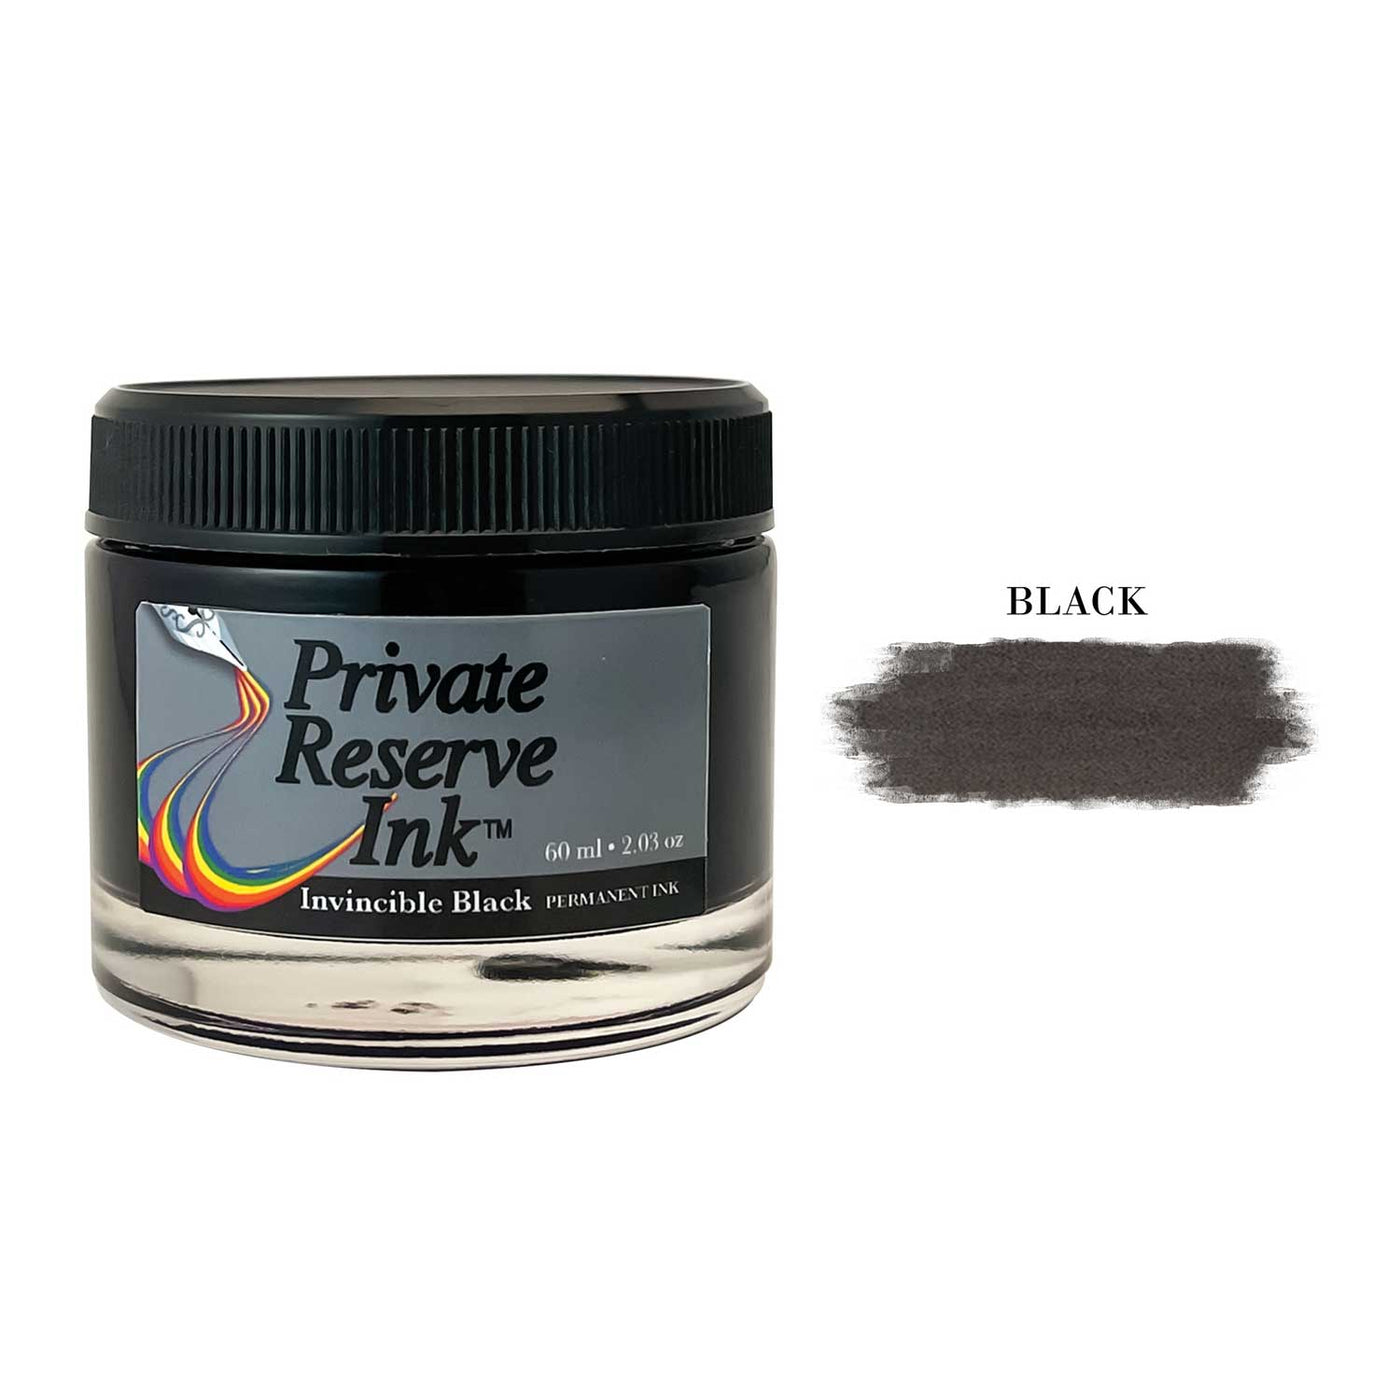 Private Reserve Invincible Black Ink Bottle - 60ml 1